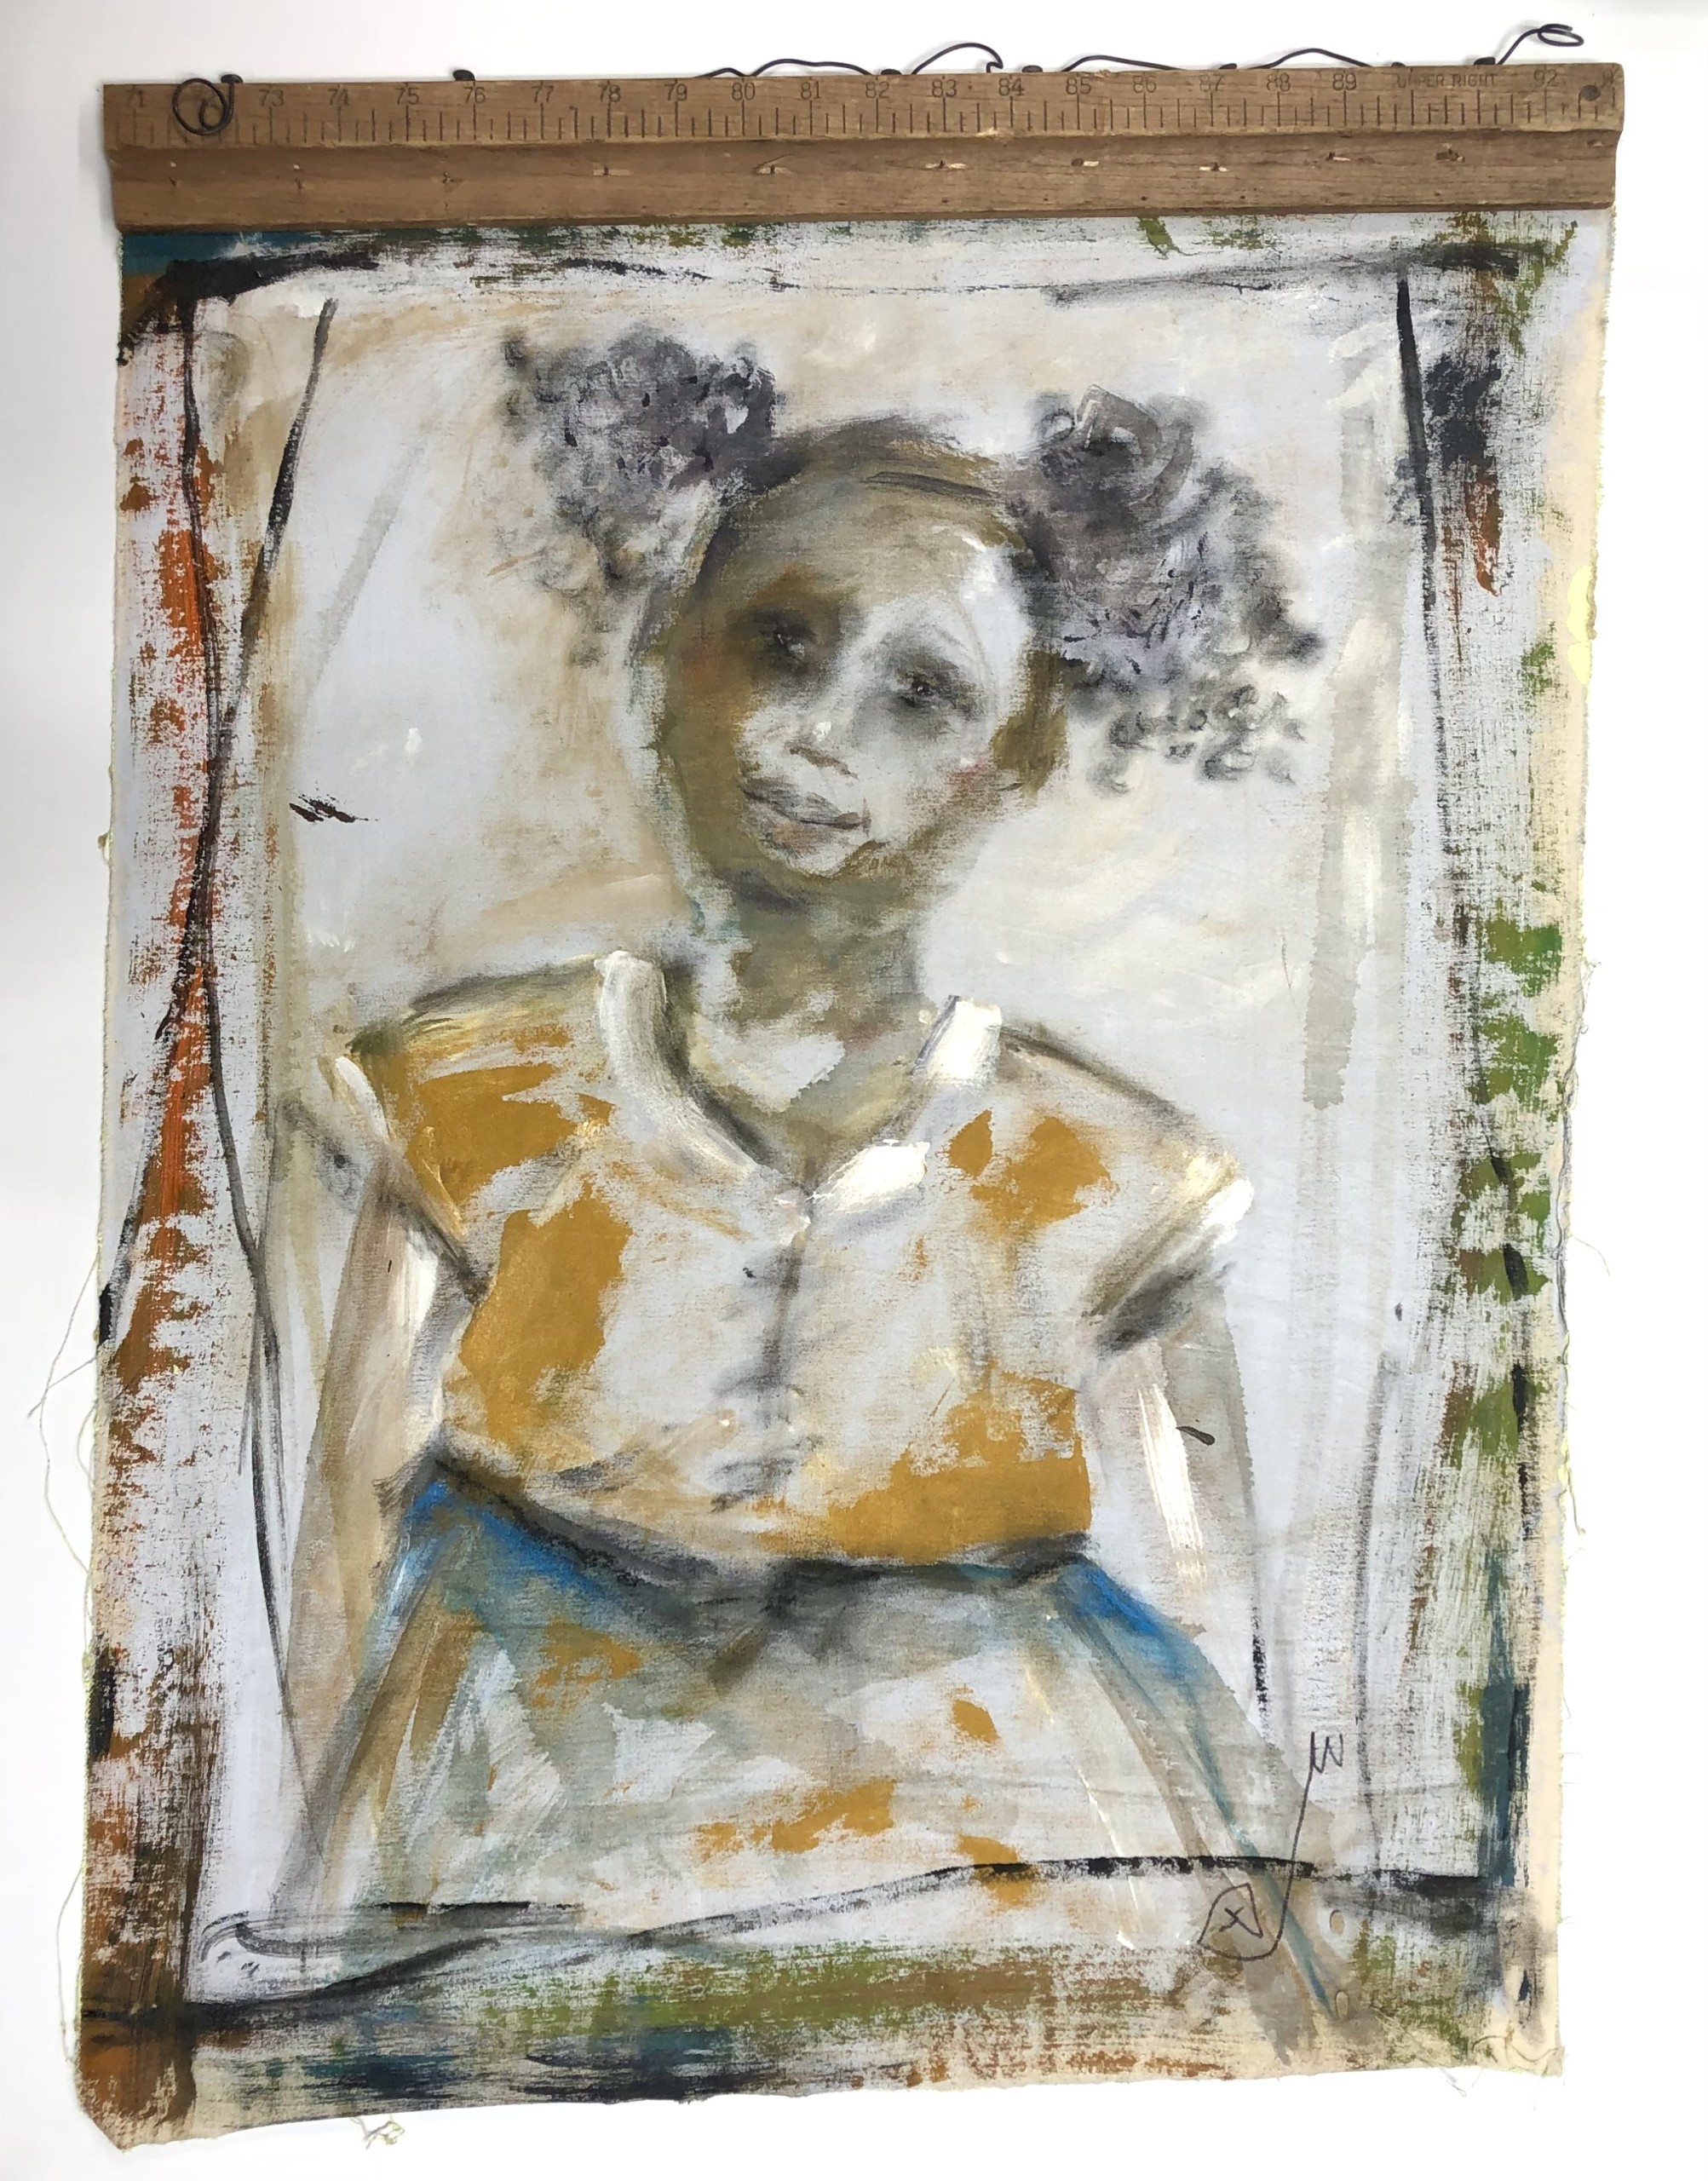 Jocelyn K Woodson, “Young Girl in Yellow”, Acrylic on canvas